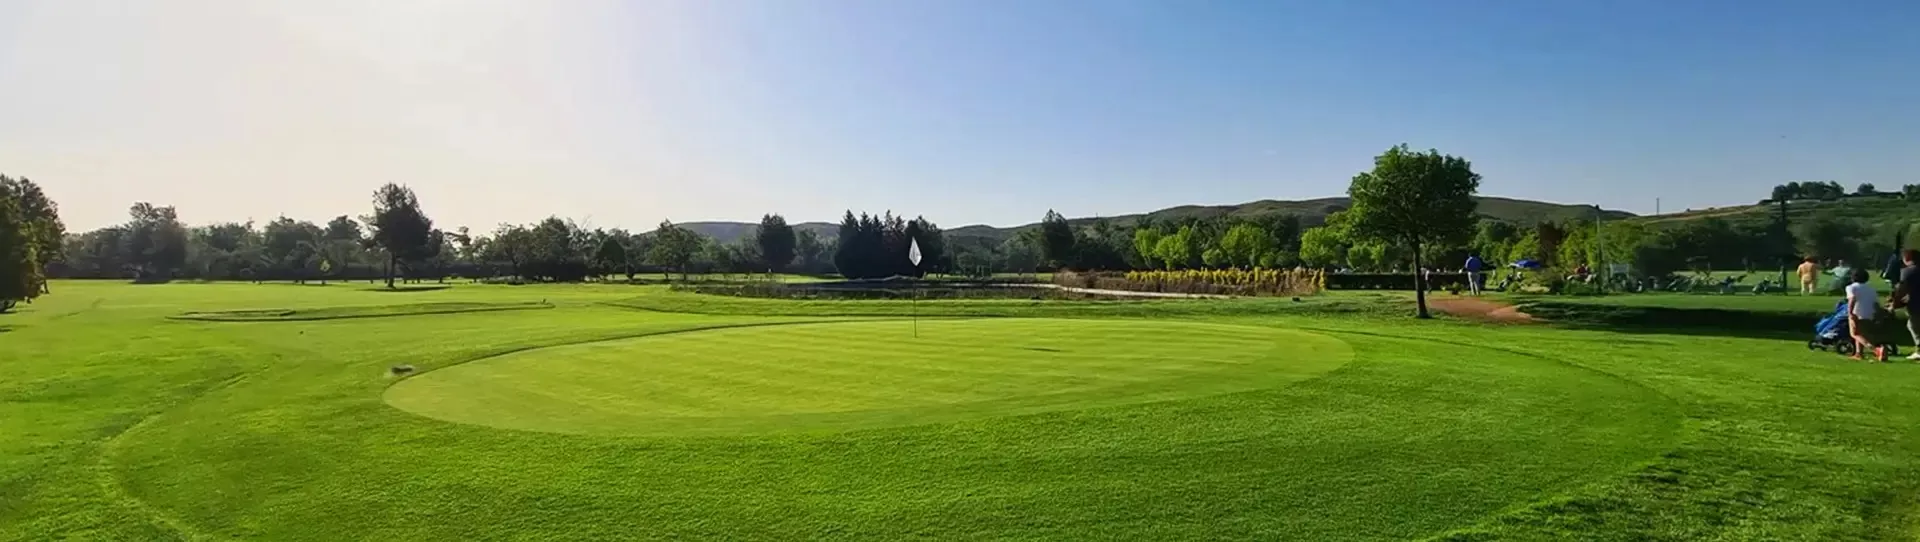 Spain golf courses - Club de Golf Aranjuez - Photo 3